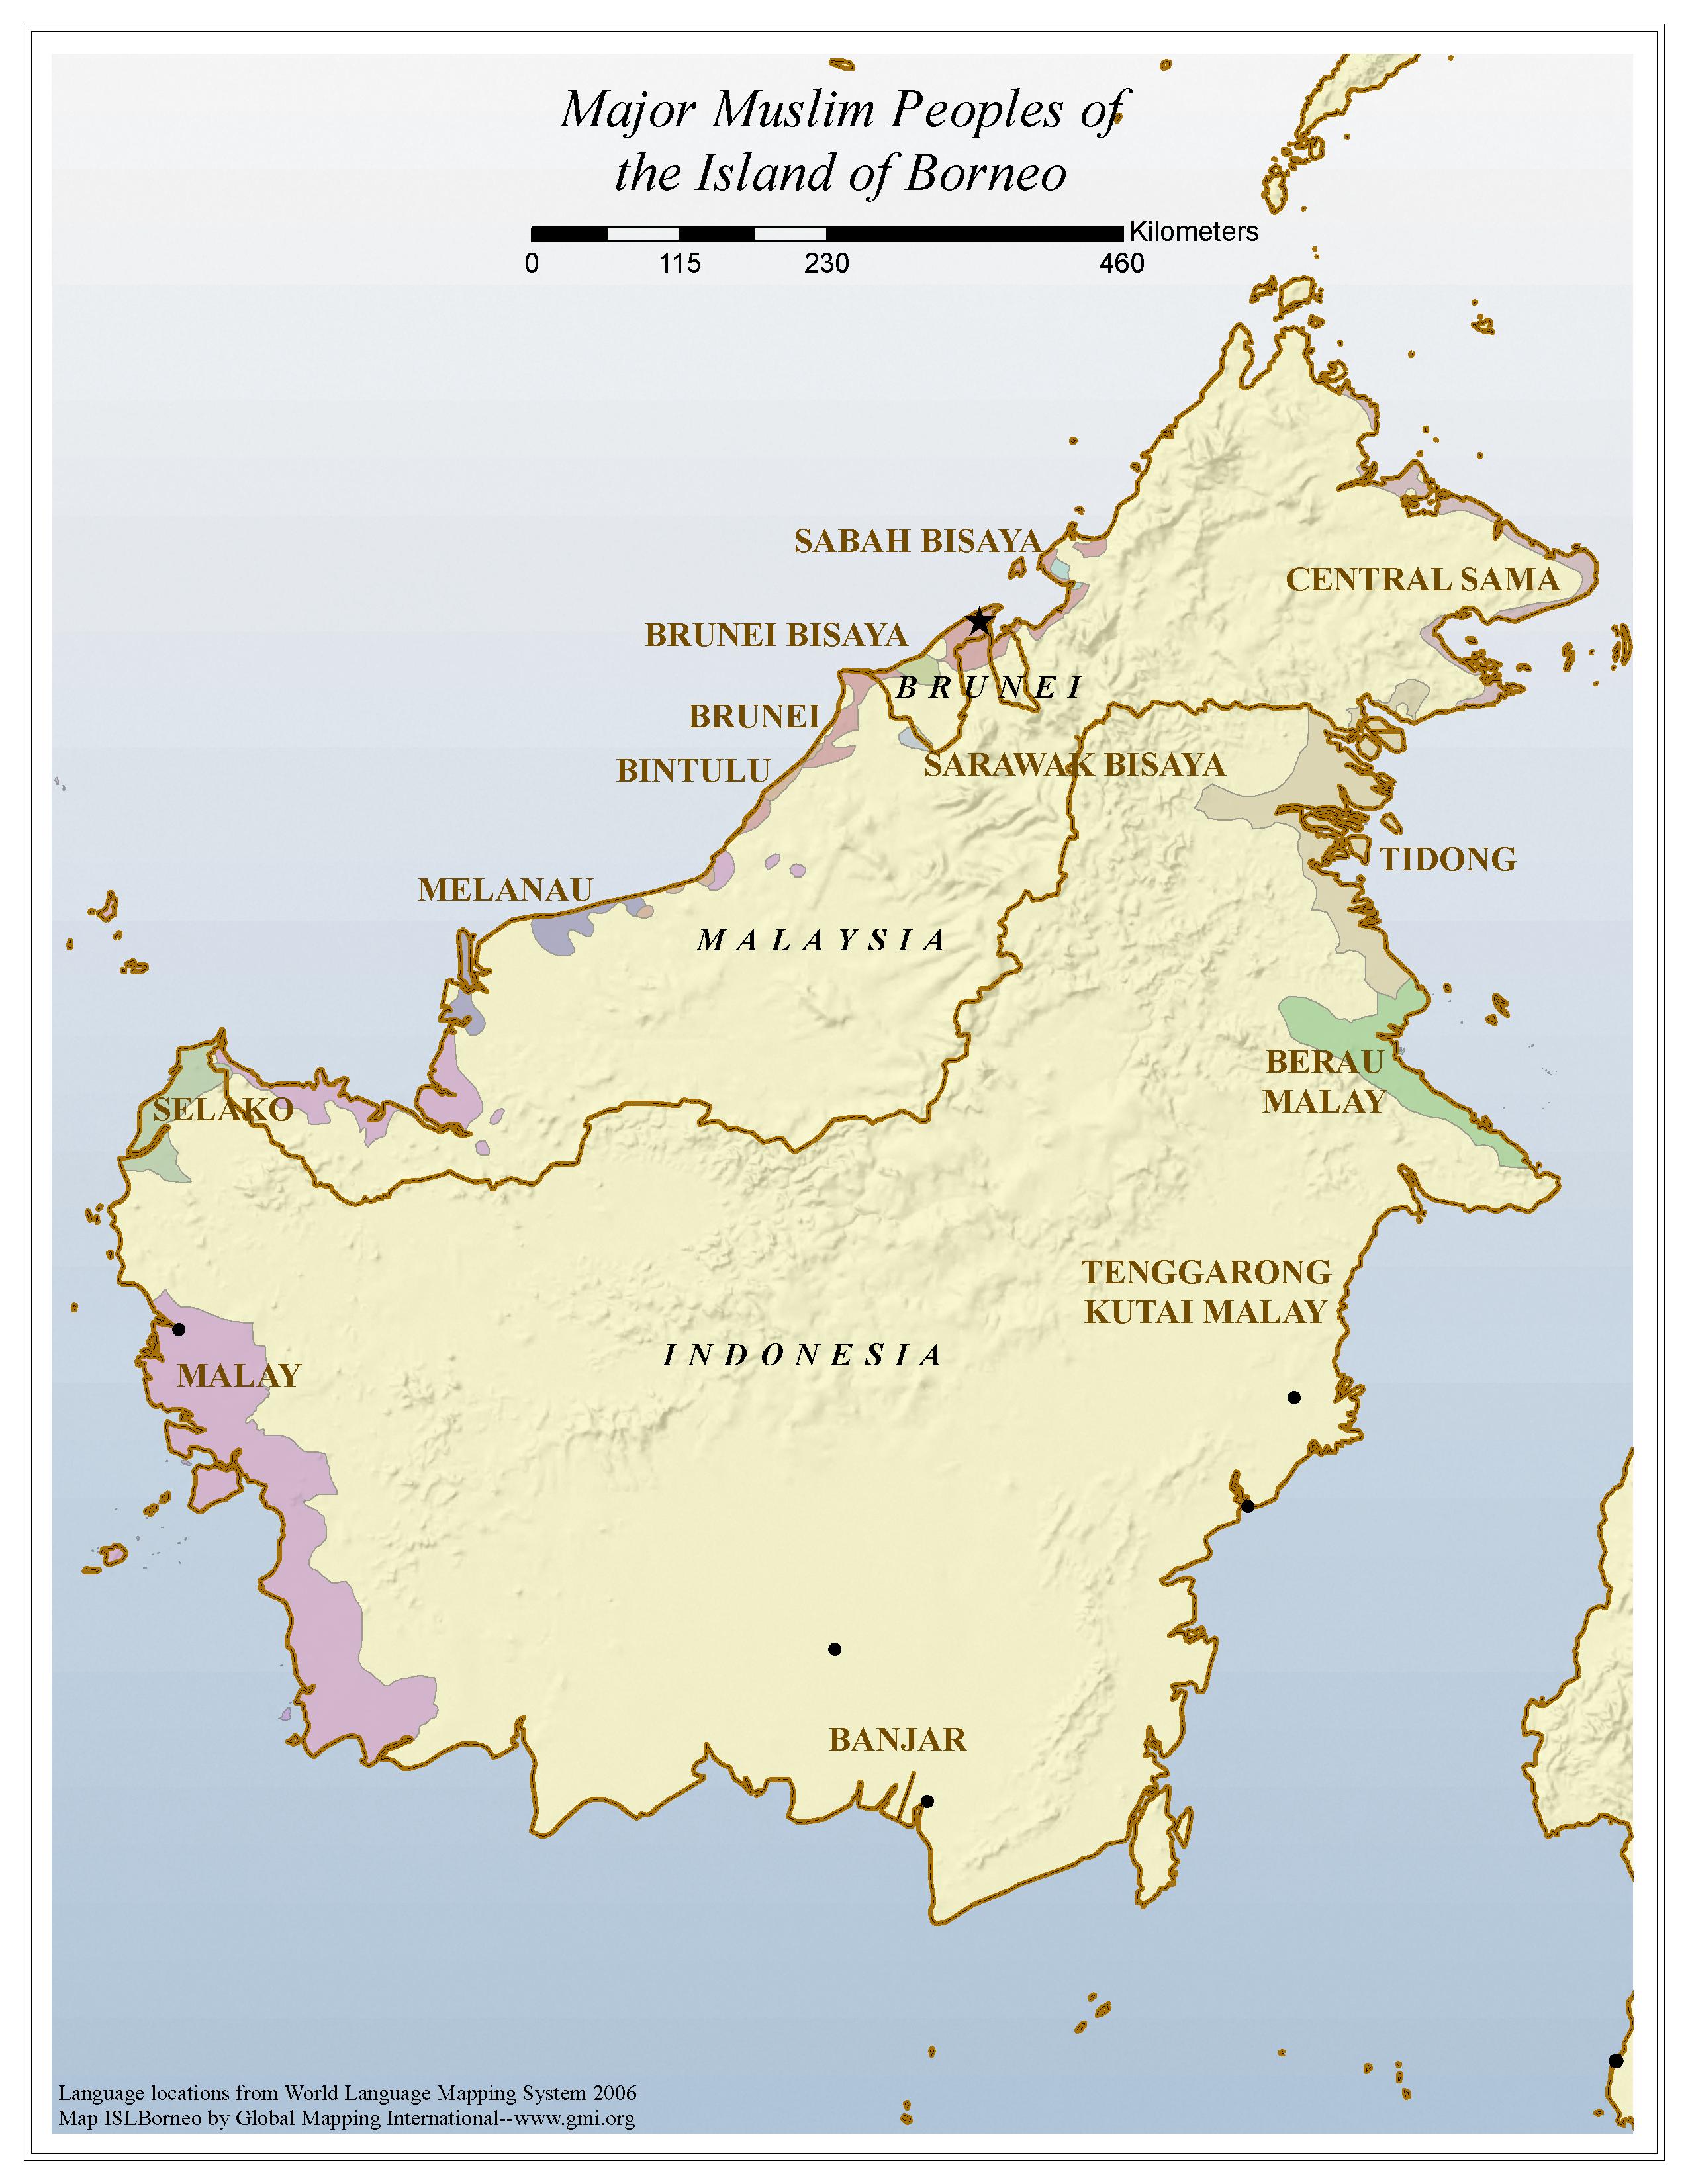 Major Muslim Peoples of the Island of Borneo